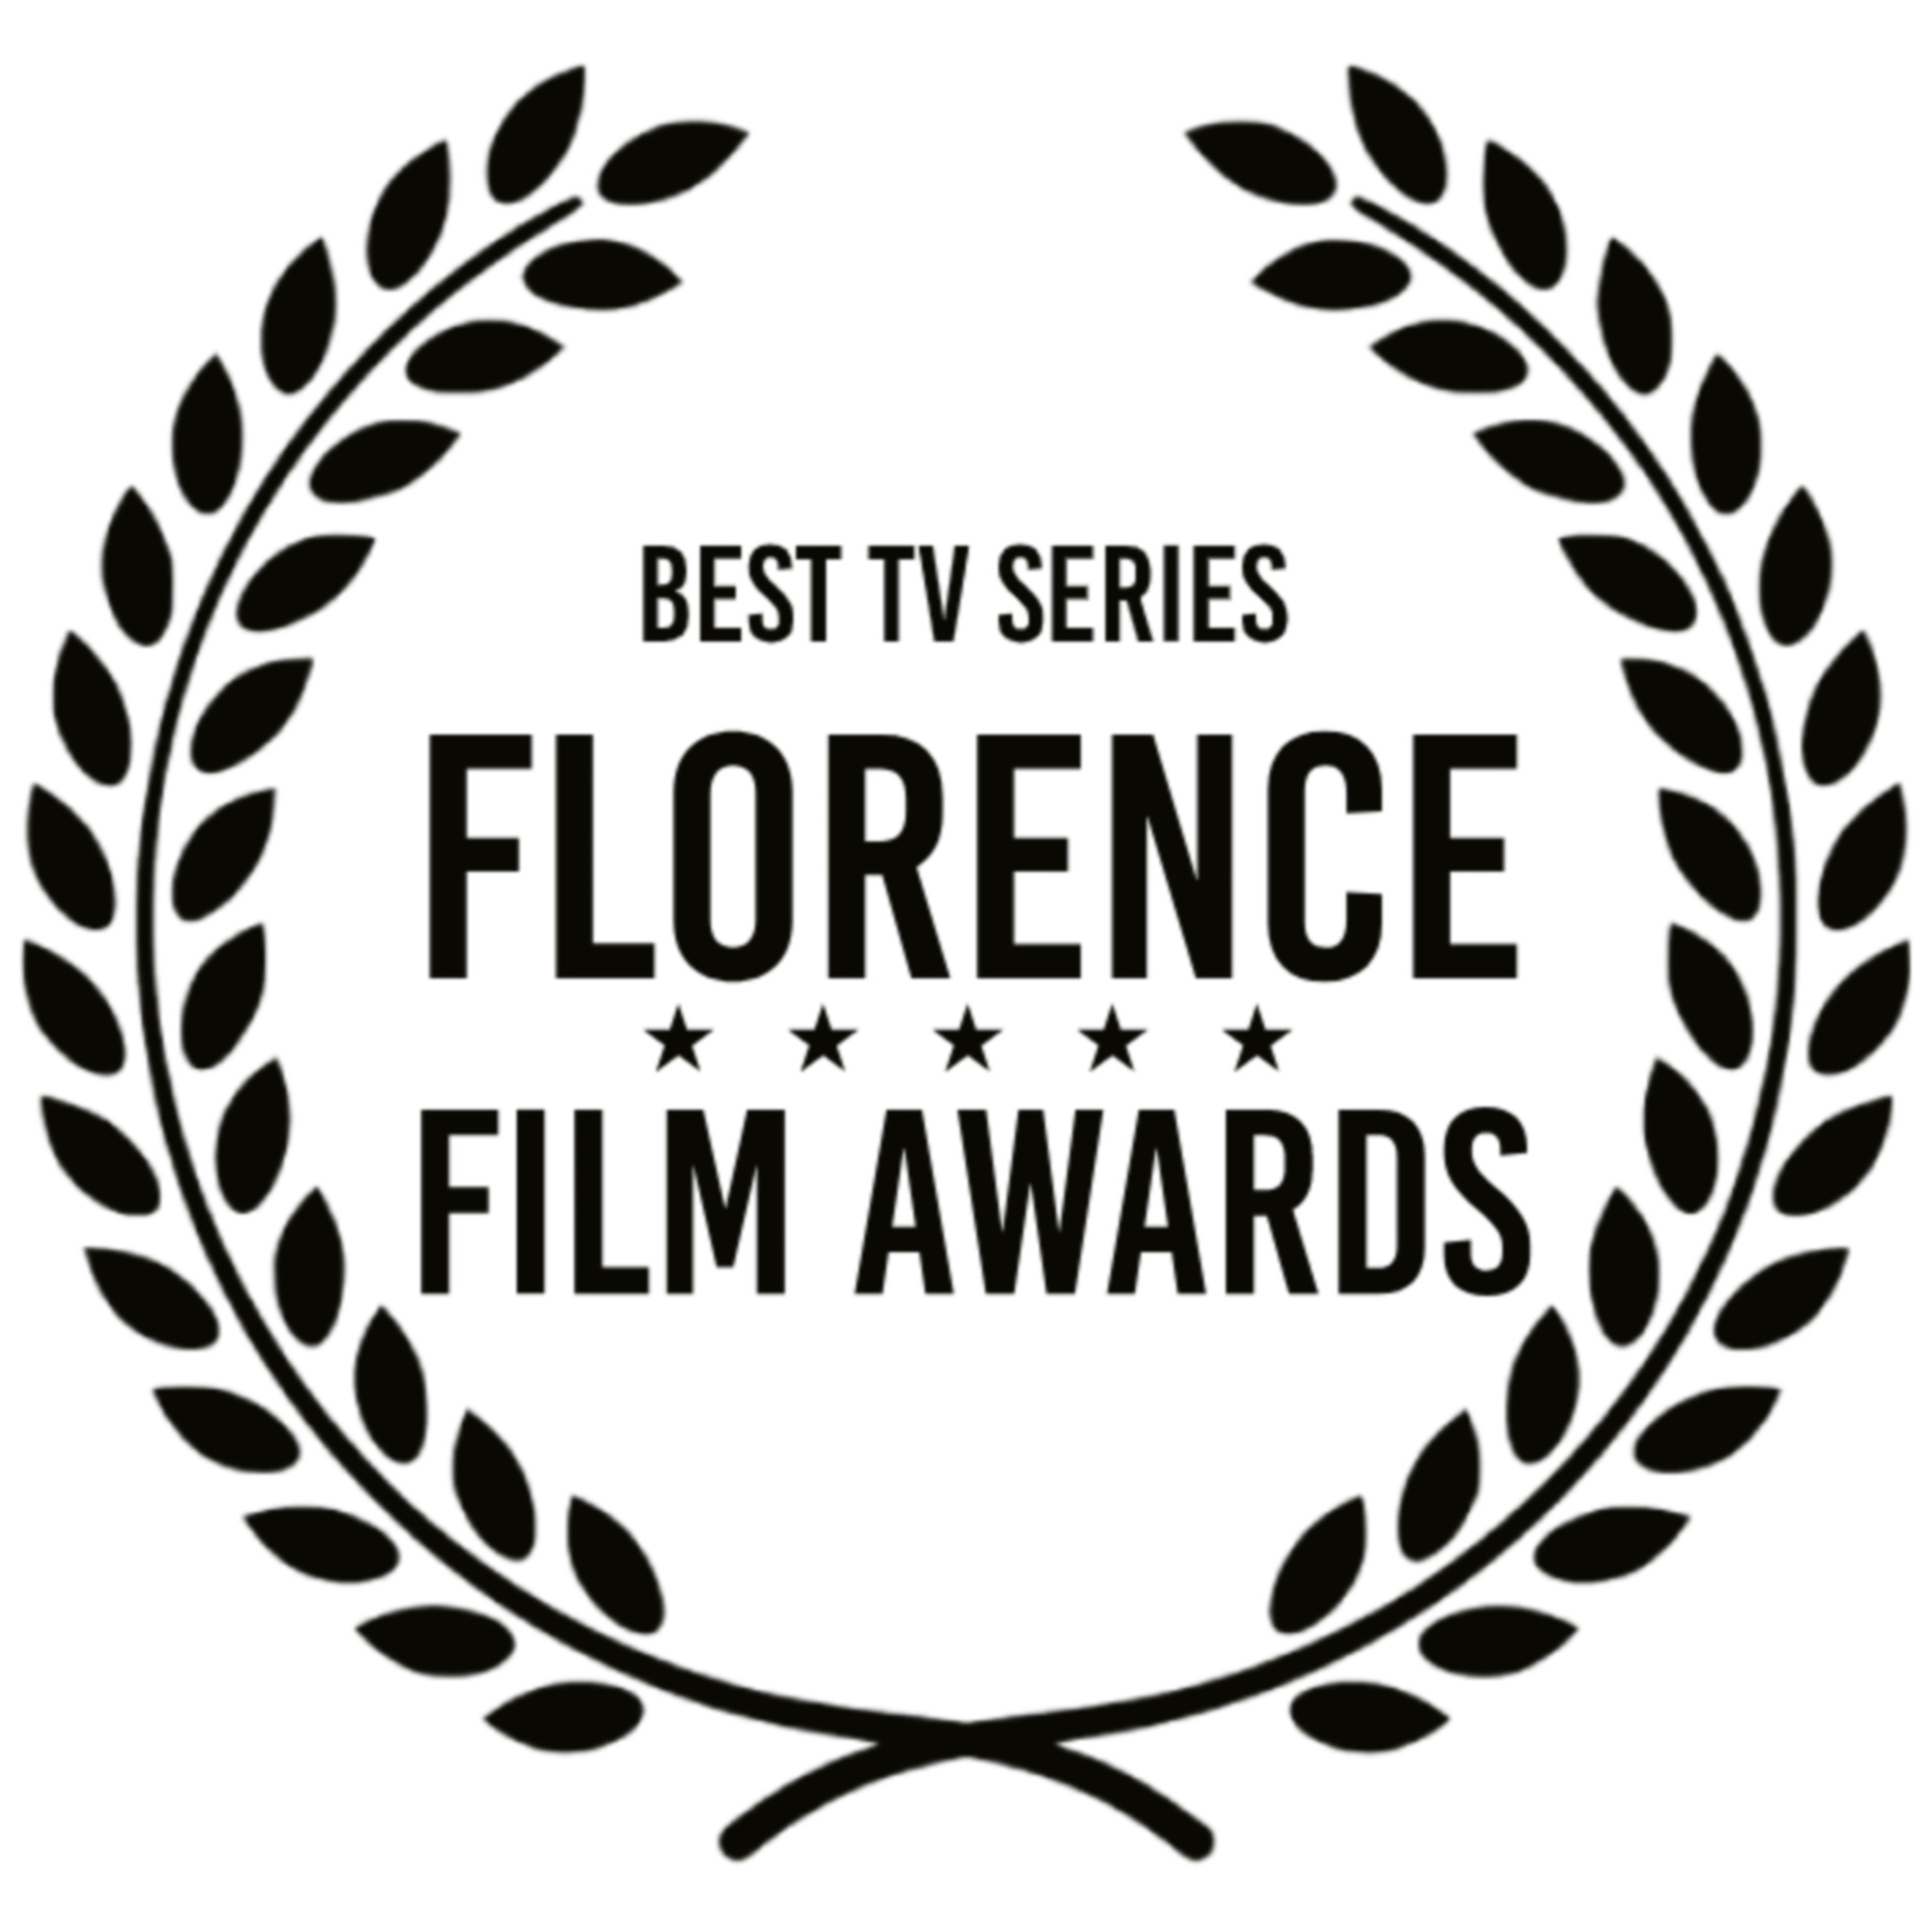 BEST TV SERIES - FLORENCE FILM AWARDS